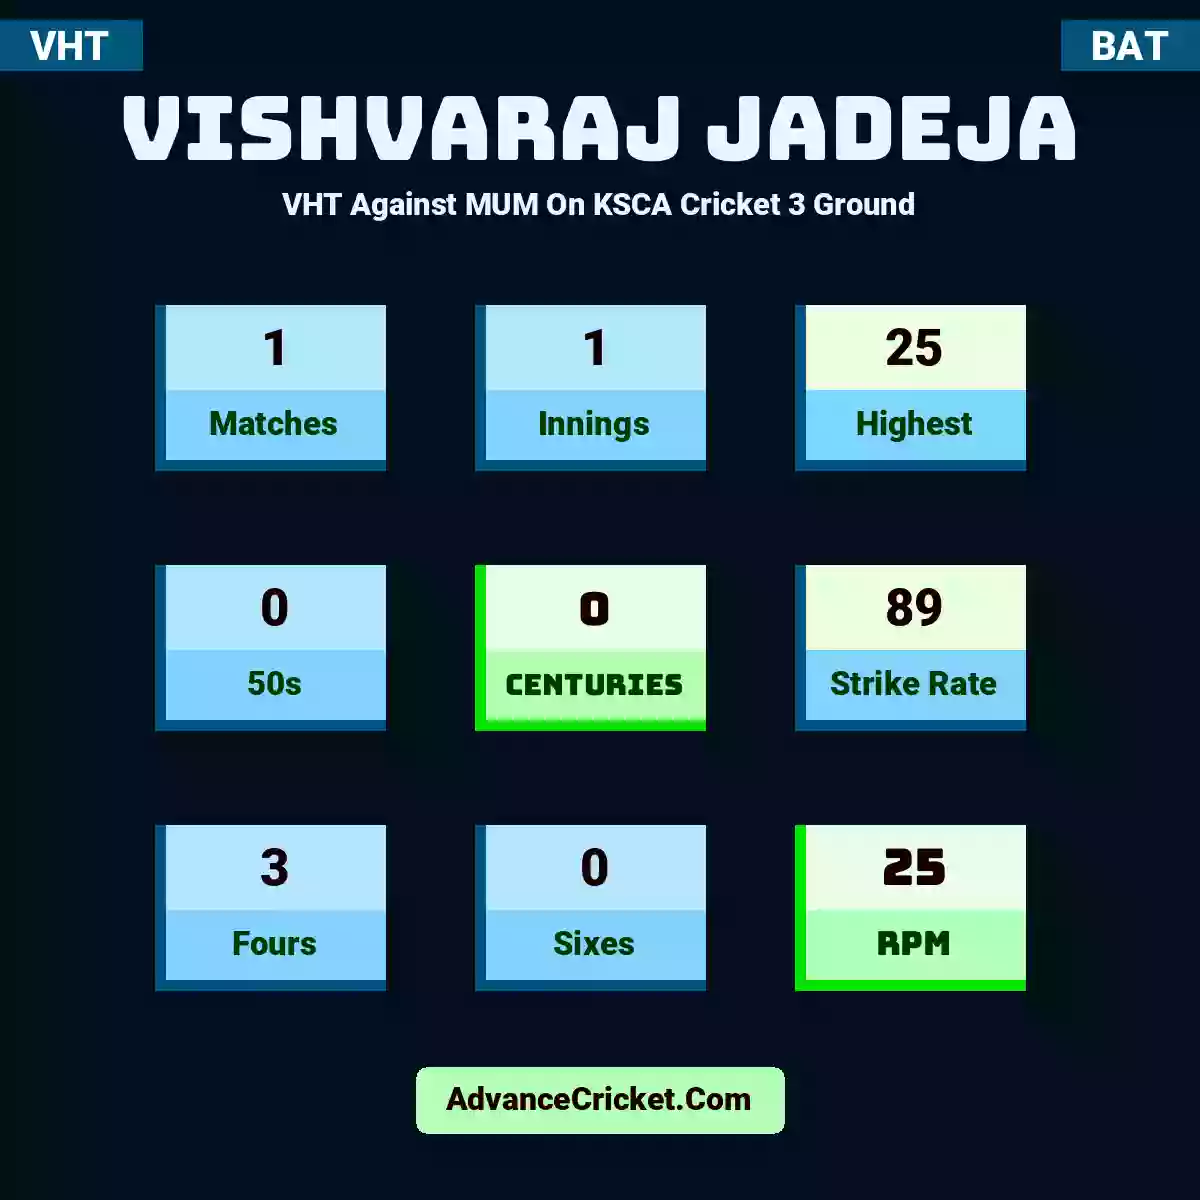 Vishvaraj Jadeja VHT  Against MUM On KSCA Cricket 3 Ground, Vishvaraj Jadeja played 1 matches, scored 25 runs as highest, 0 half-centuries, and 0 centuries, with a strike rate of 89. V.Jadeja hit 3 fours and 0 sixes, with an RPM of 25.